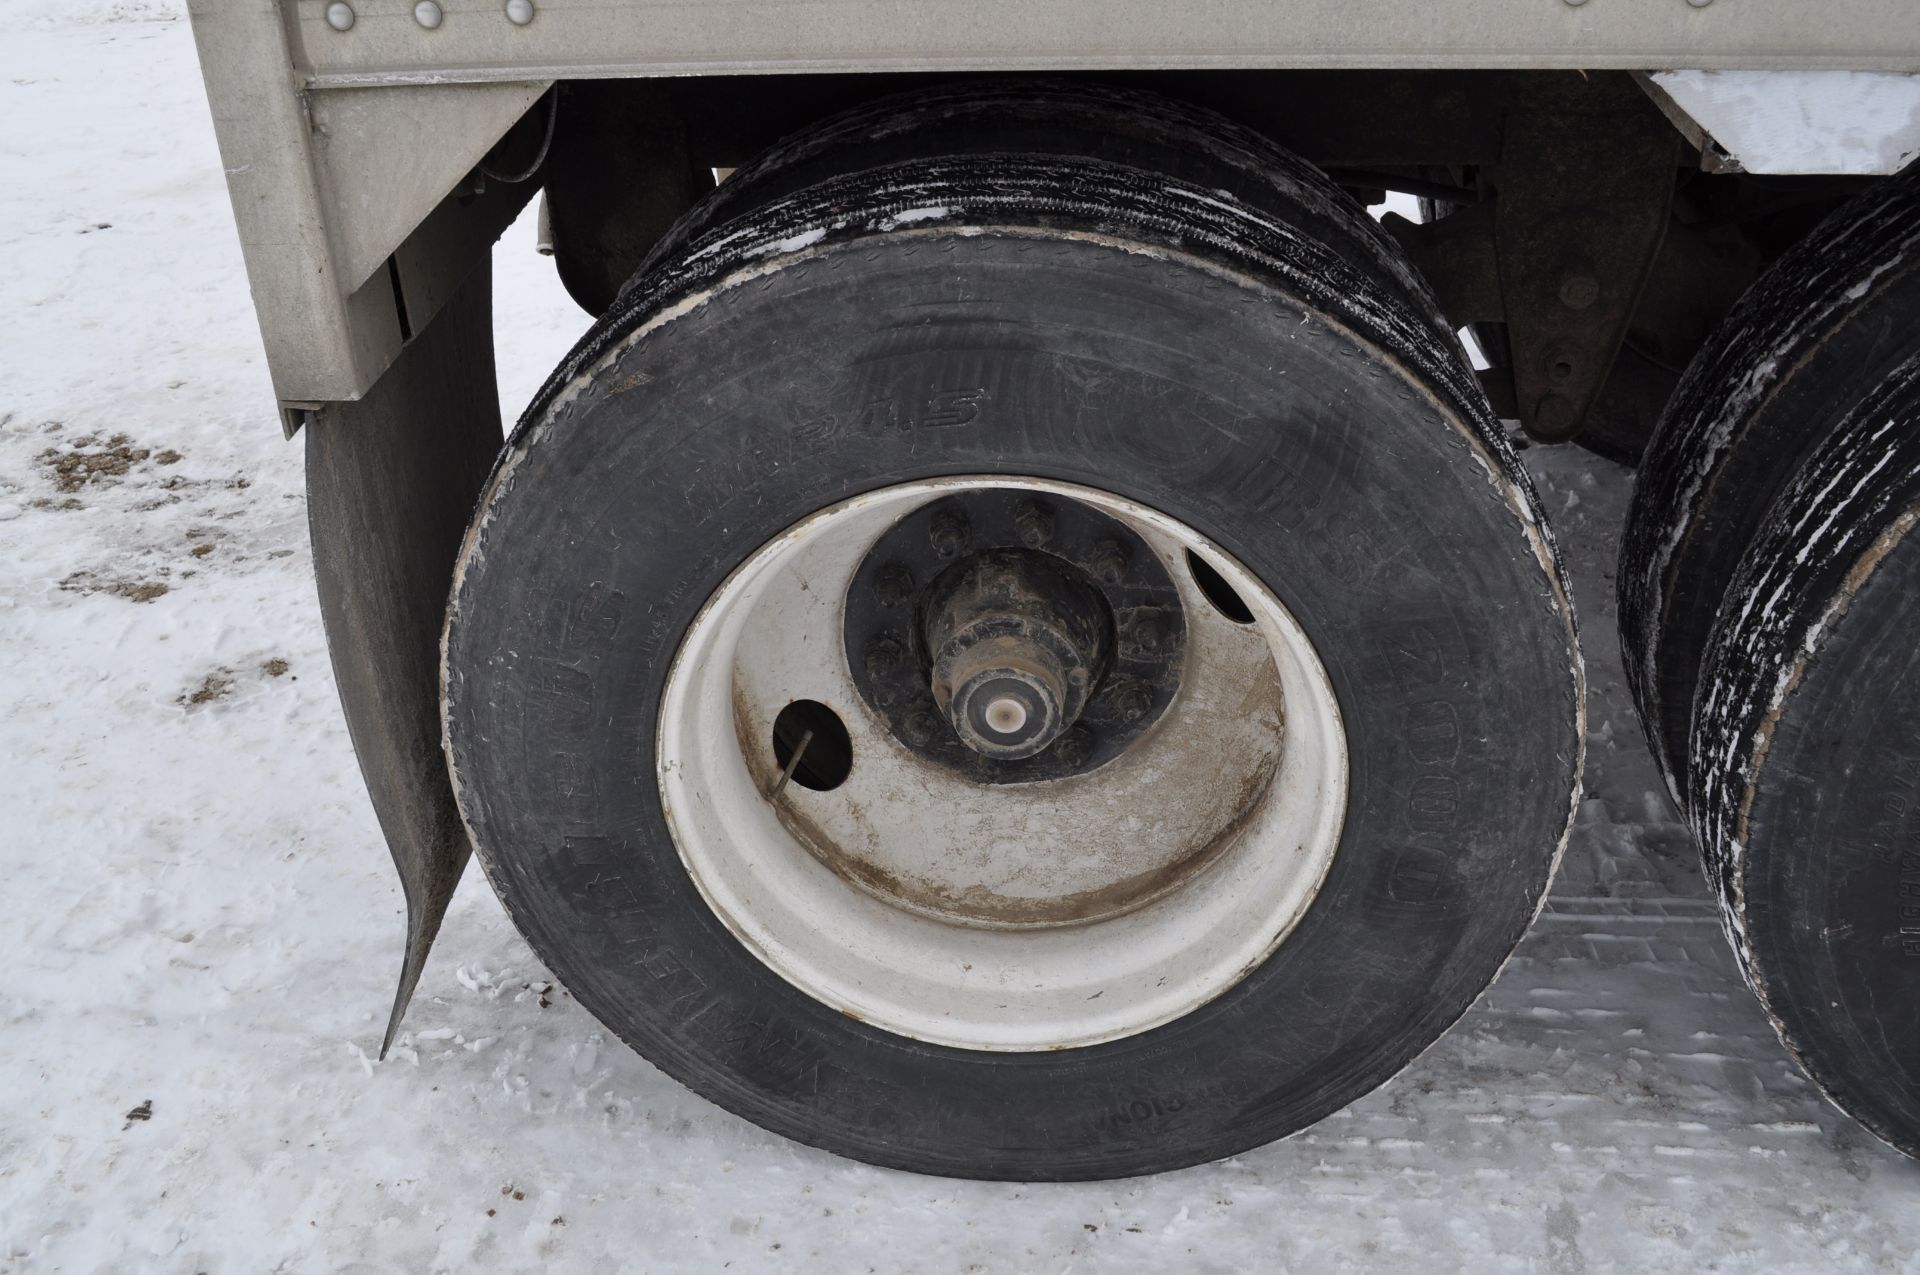 1993 42’ Timpte hopper bottom trailer, spring ride, 11R24.5 tires, roll tarp, VIN H42221PB084815 - Image 15 of 19